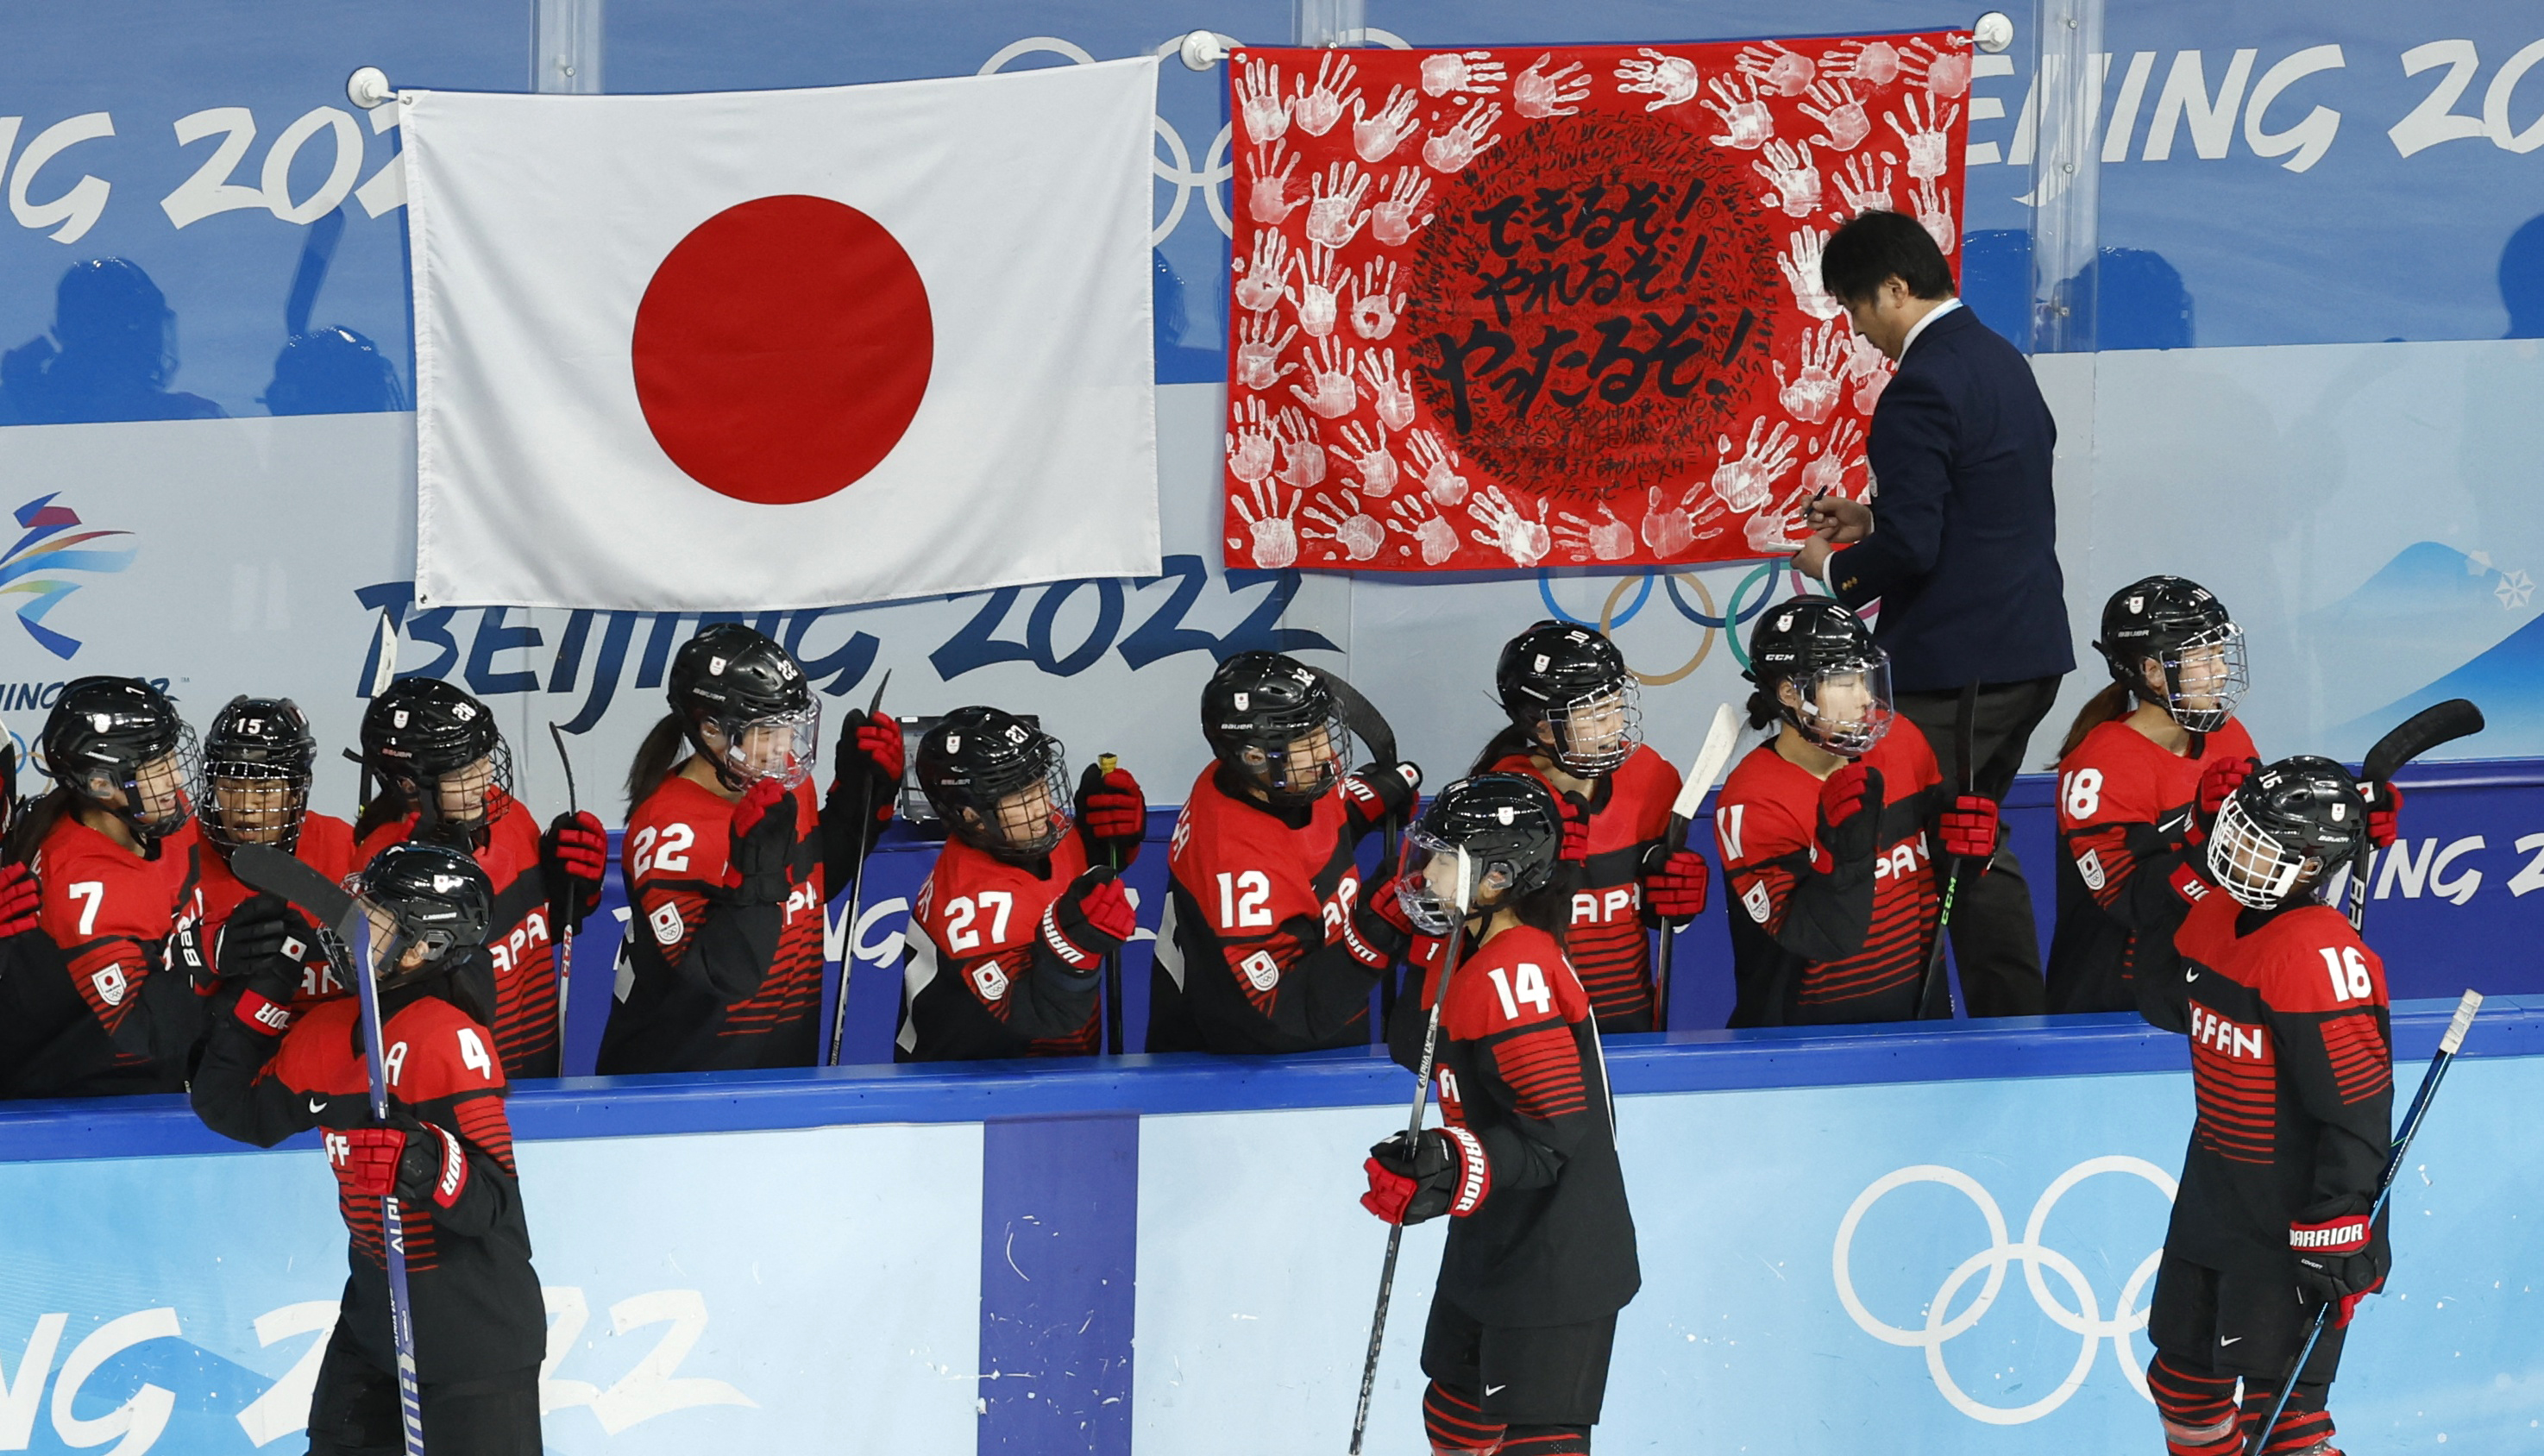 Japan's women's hockey team sets sights on podium ahead of